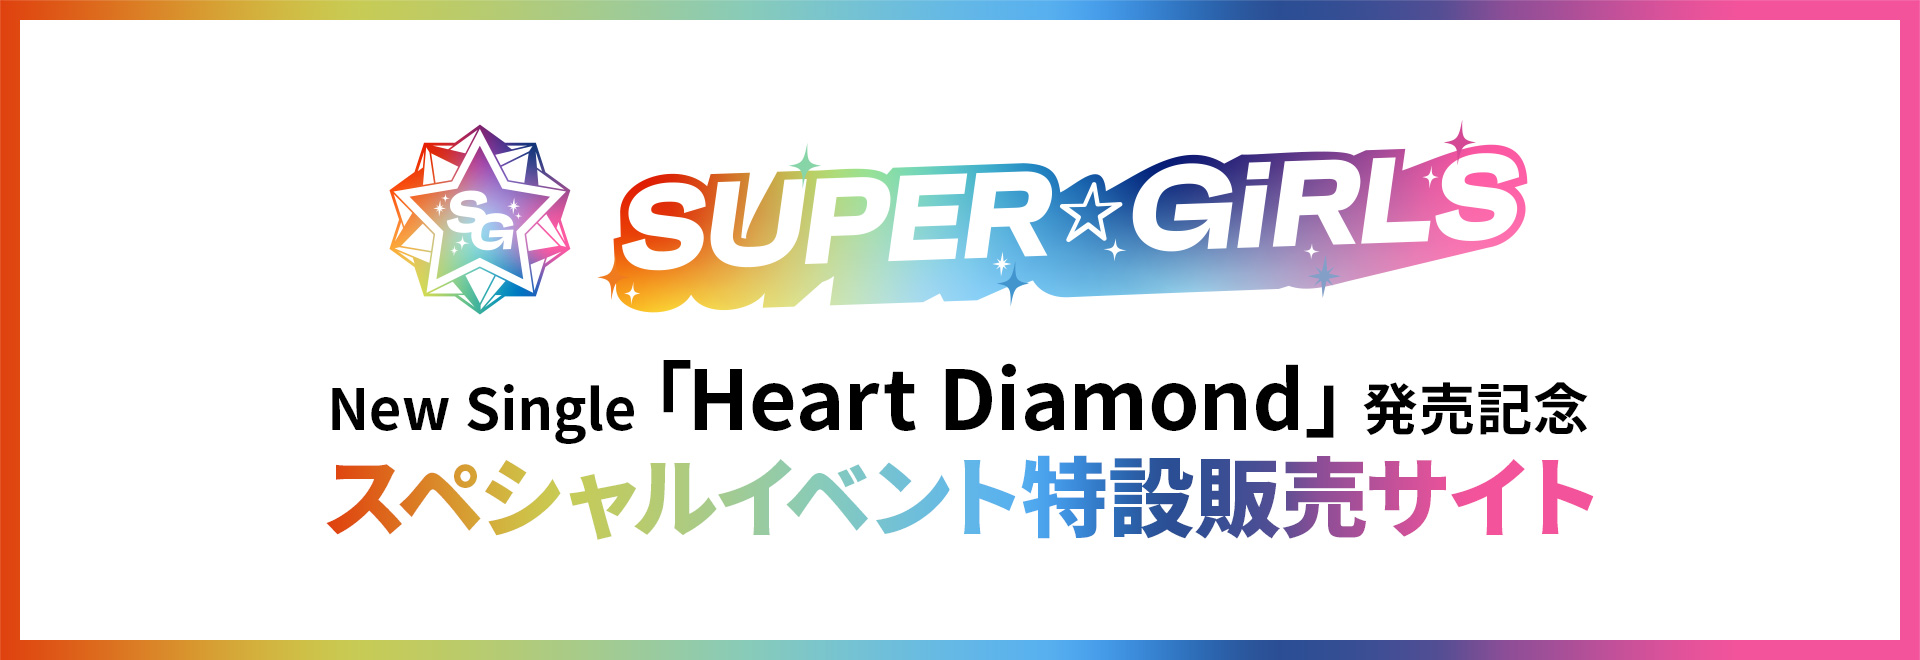 SUPER☆GiRLS NewSg「Heart Diamond」発売記念“mu-mo SHOPスペシャルイベント参加権”付き特設販売サイト